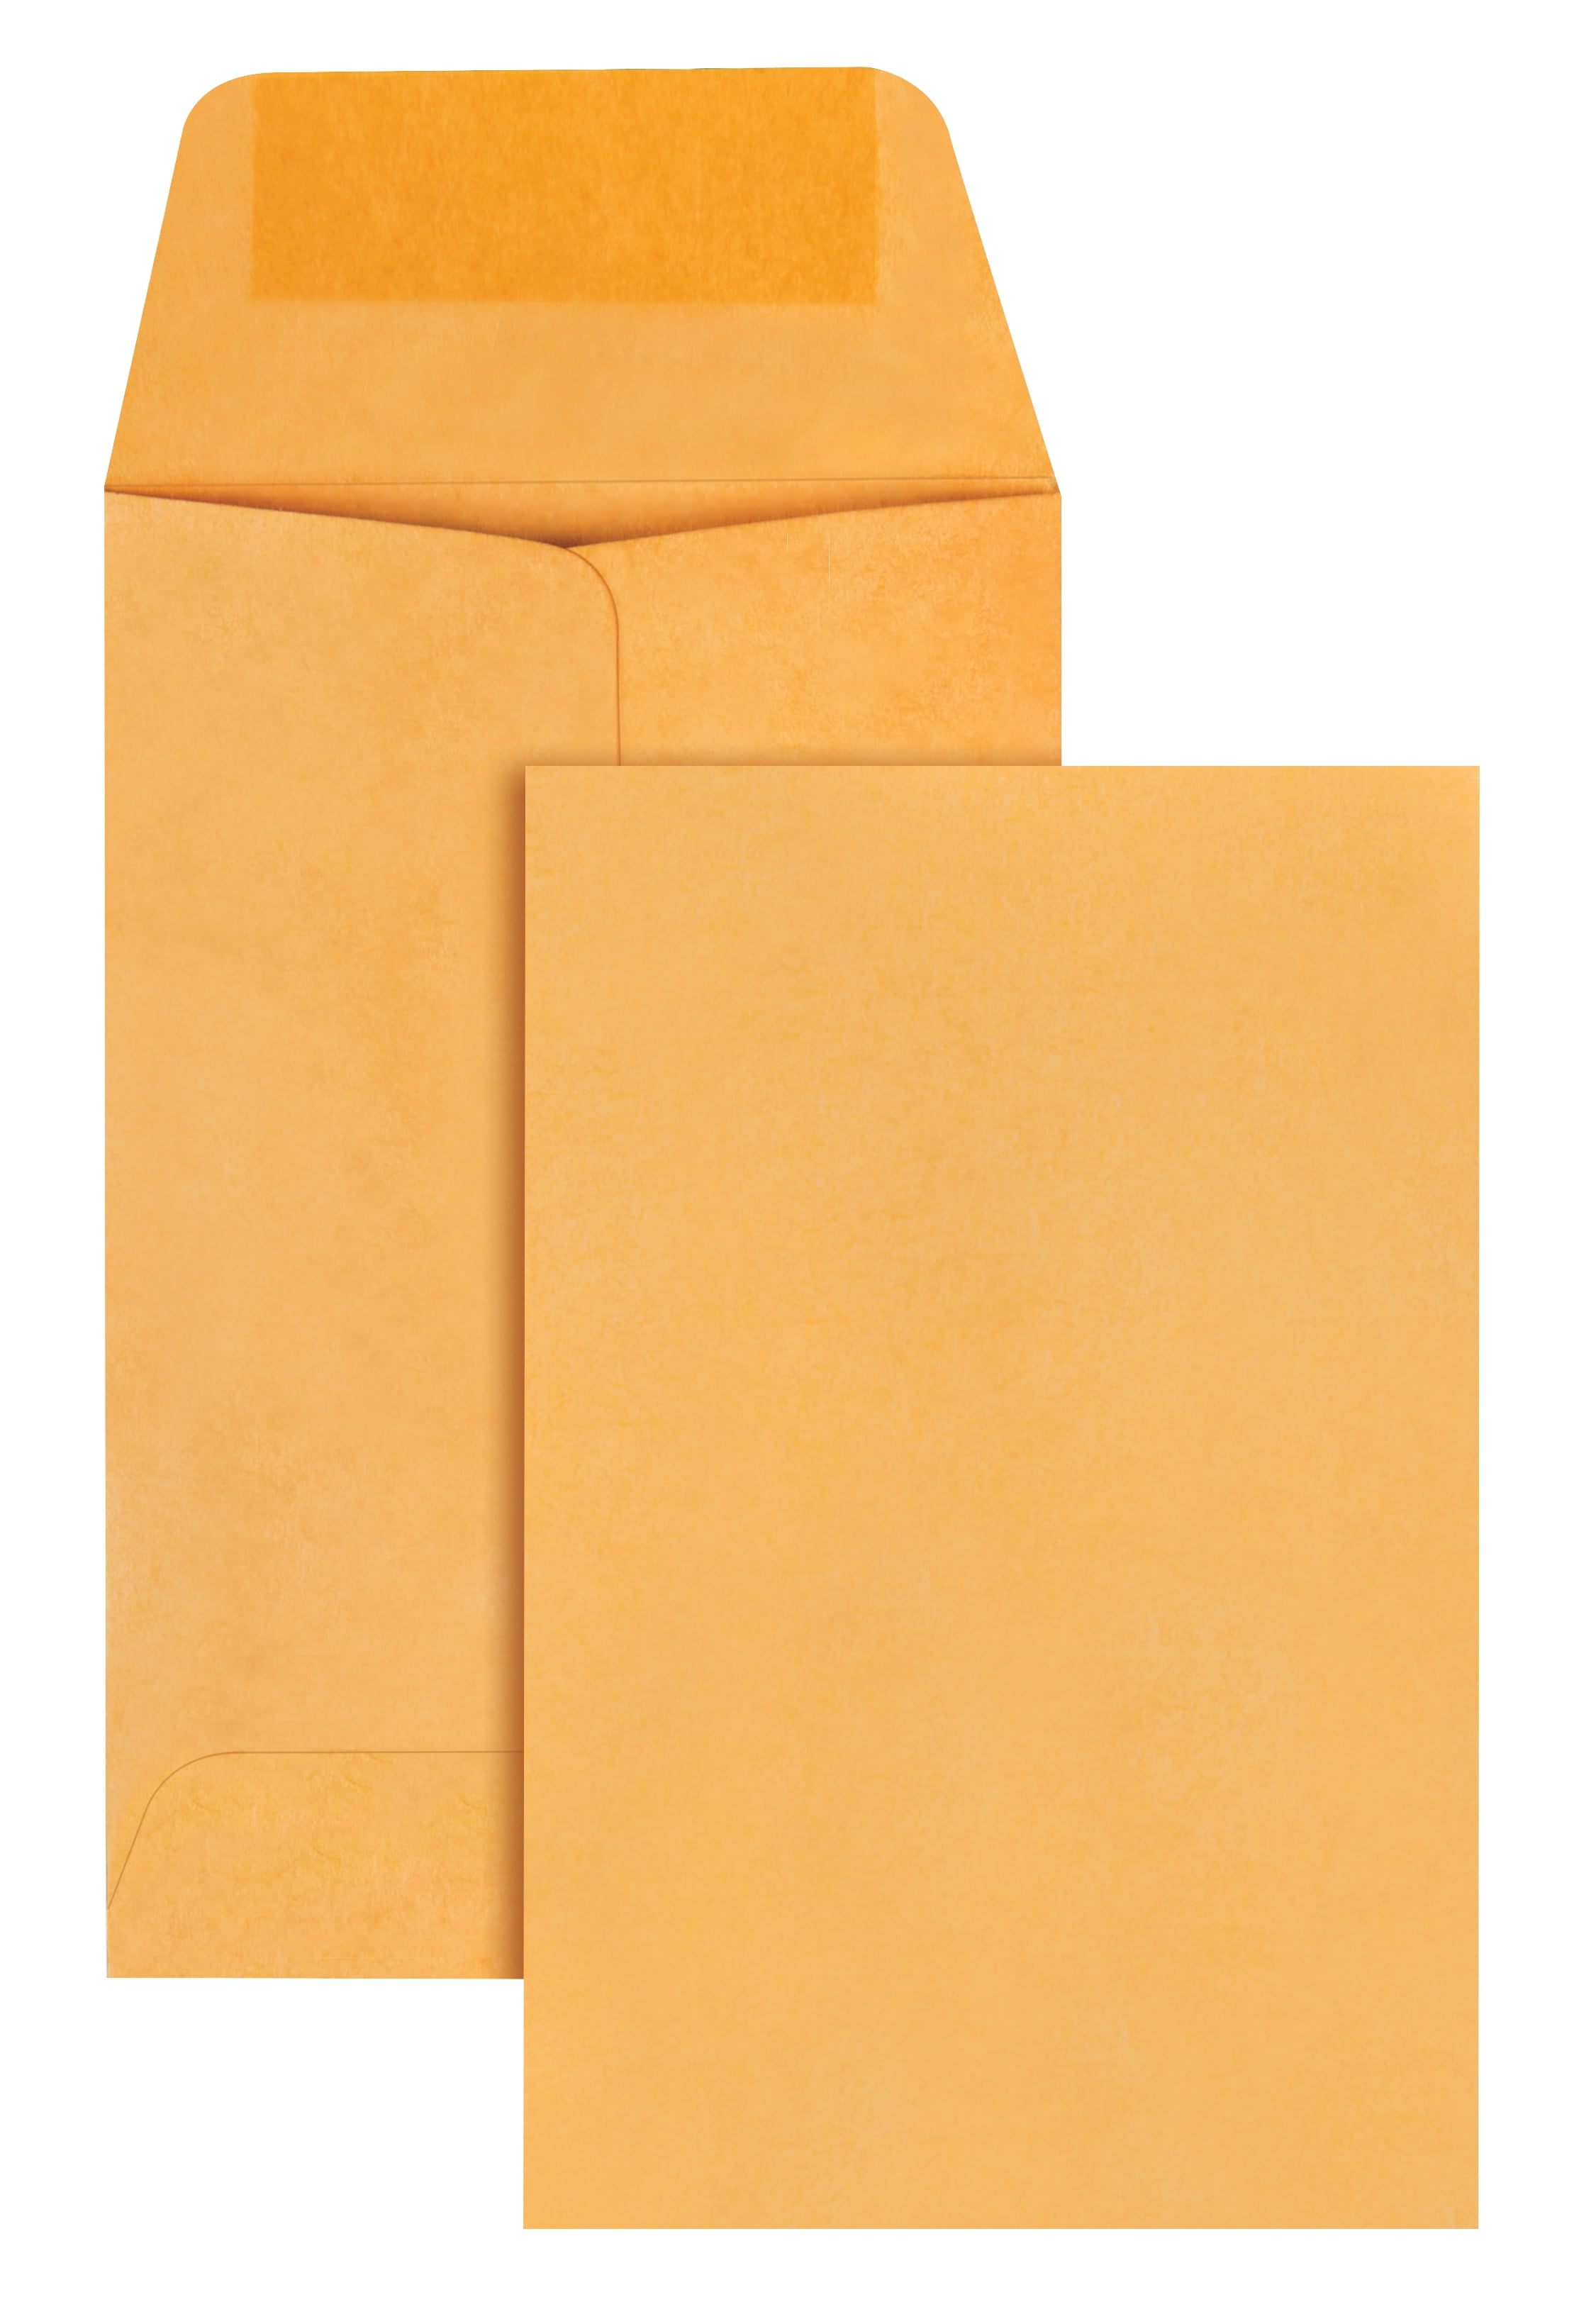 Envelope Moistener with Adhesive, 50 mL, Green